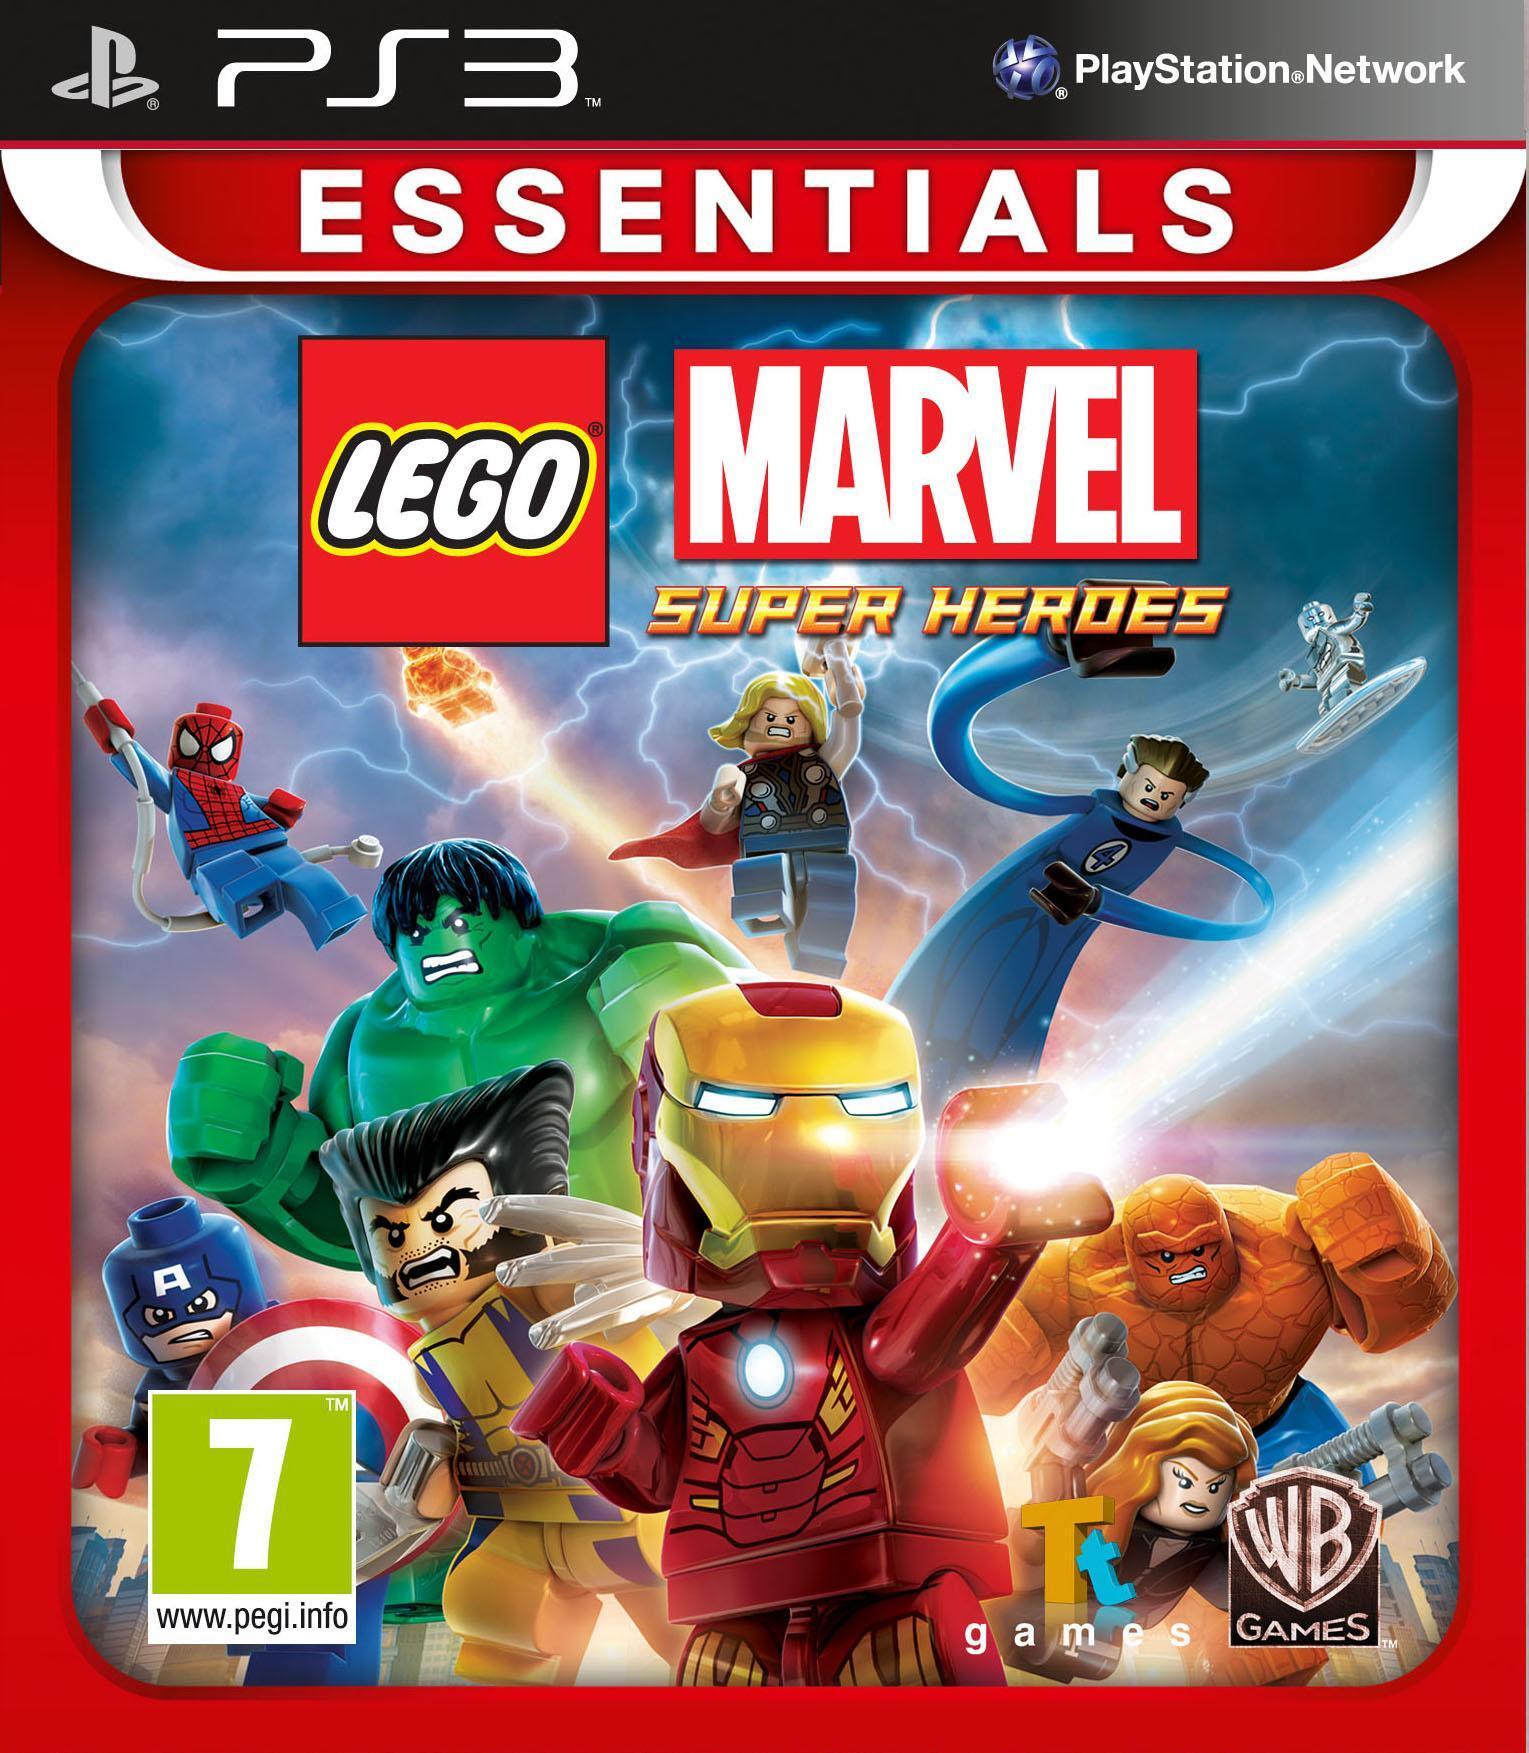 Warner Bros. Interactive LEGO Marvel Super Heroes PlayStation 3